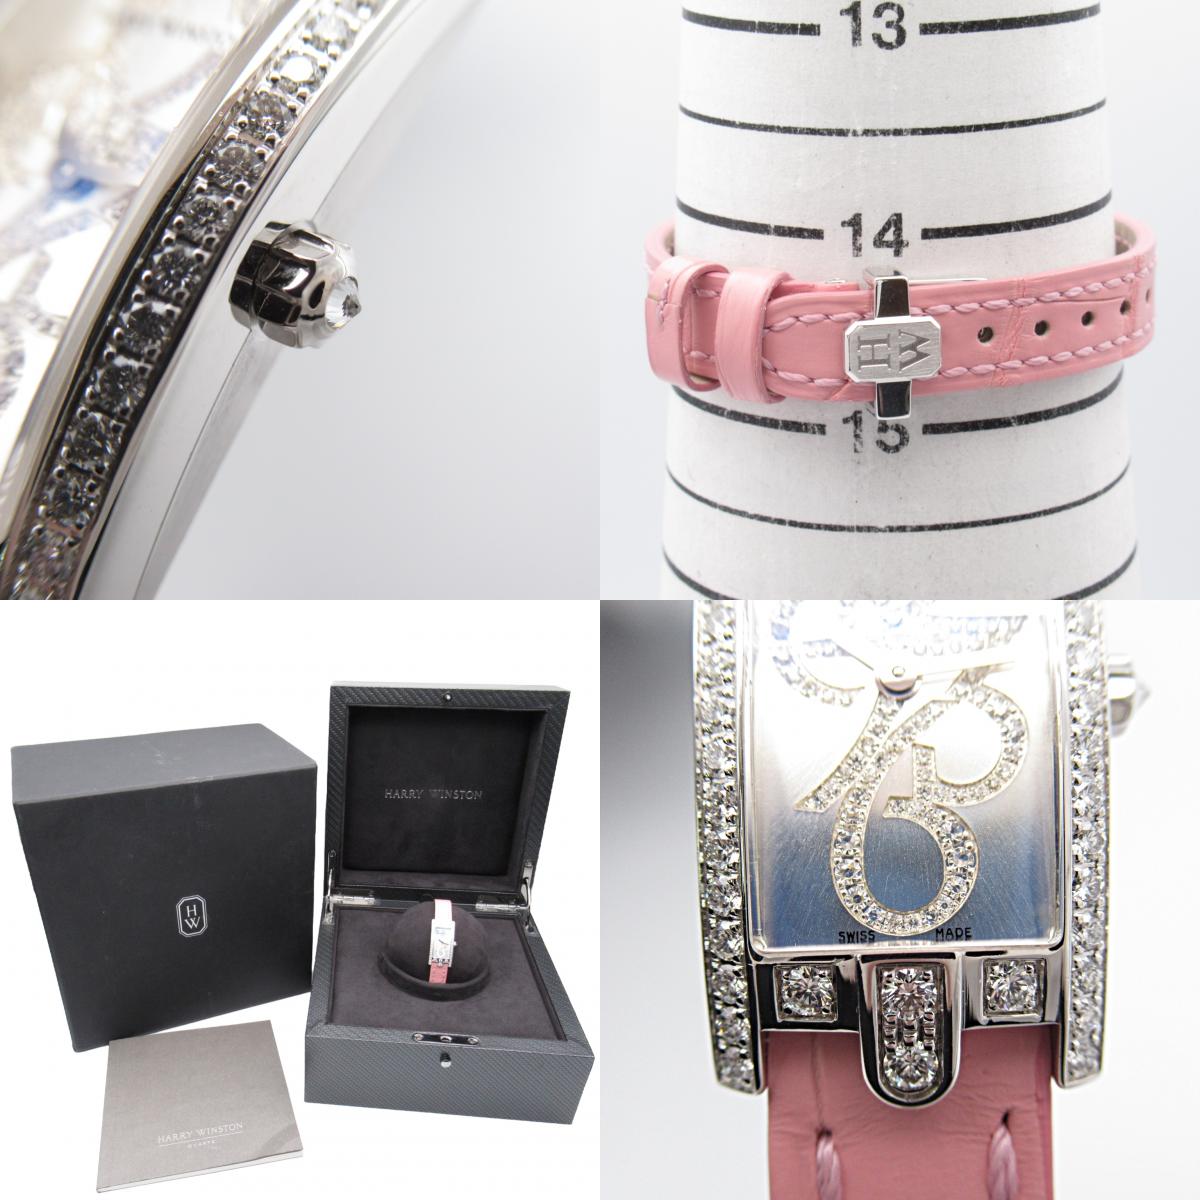 Harry Winston Harry Winston Avenue C Mini Diamond   Watch K18WG (White G) Leather Belt  Silver  AVCQHM16WW014